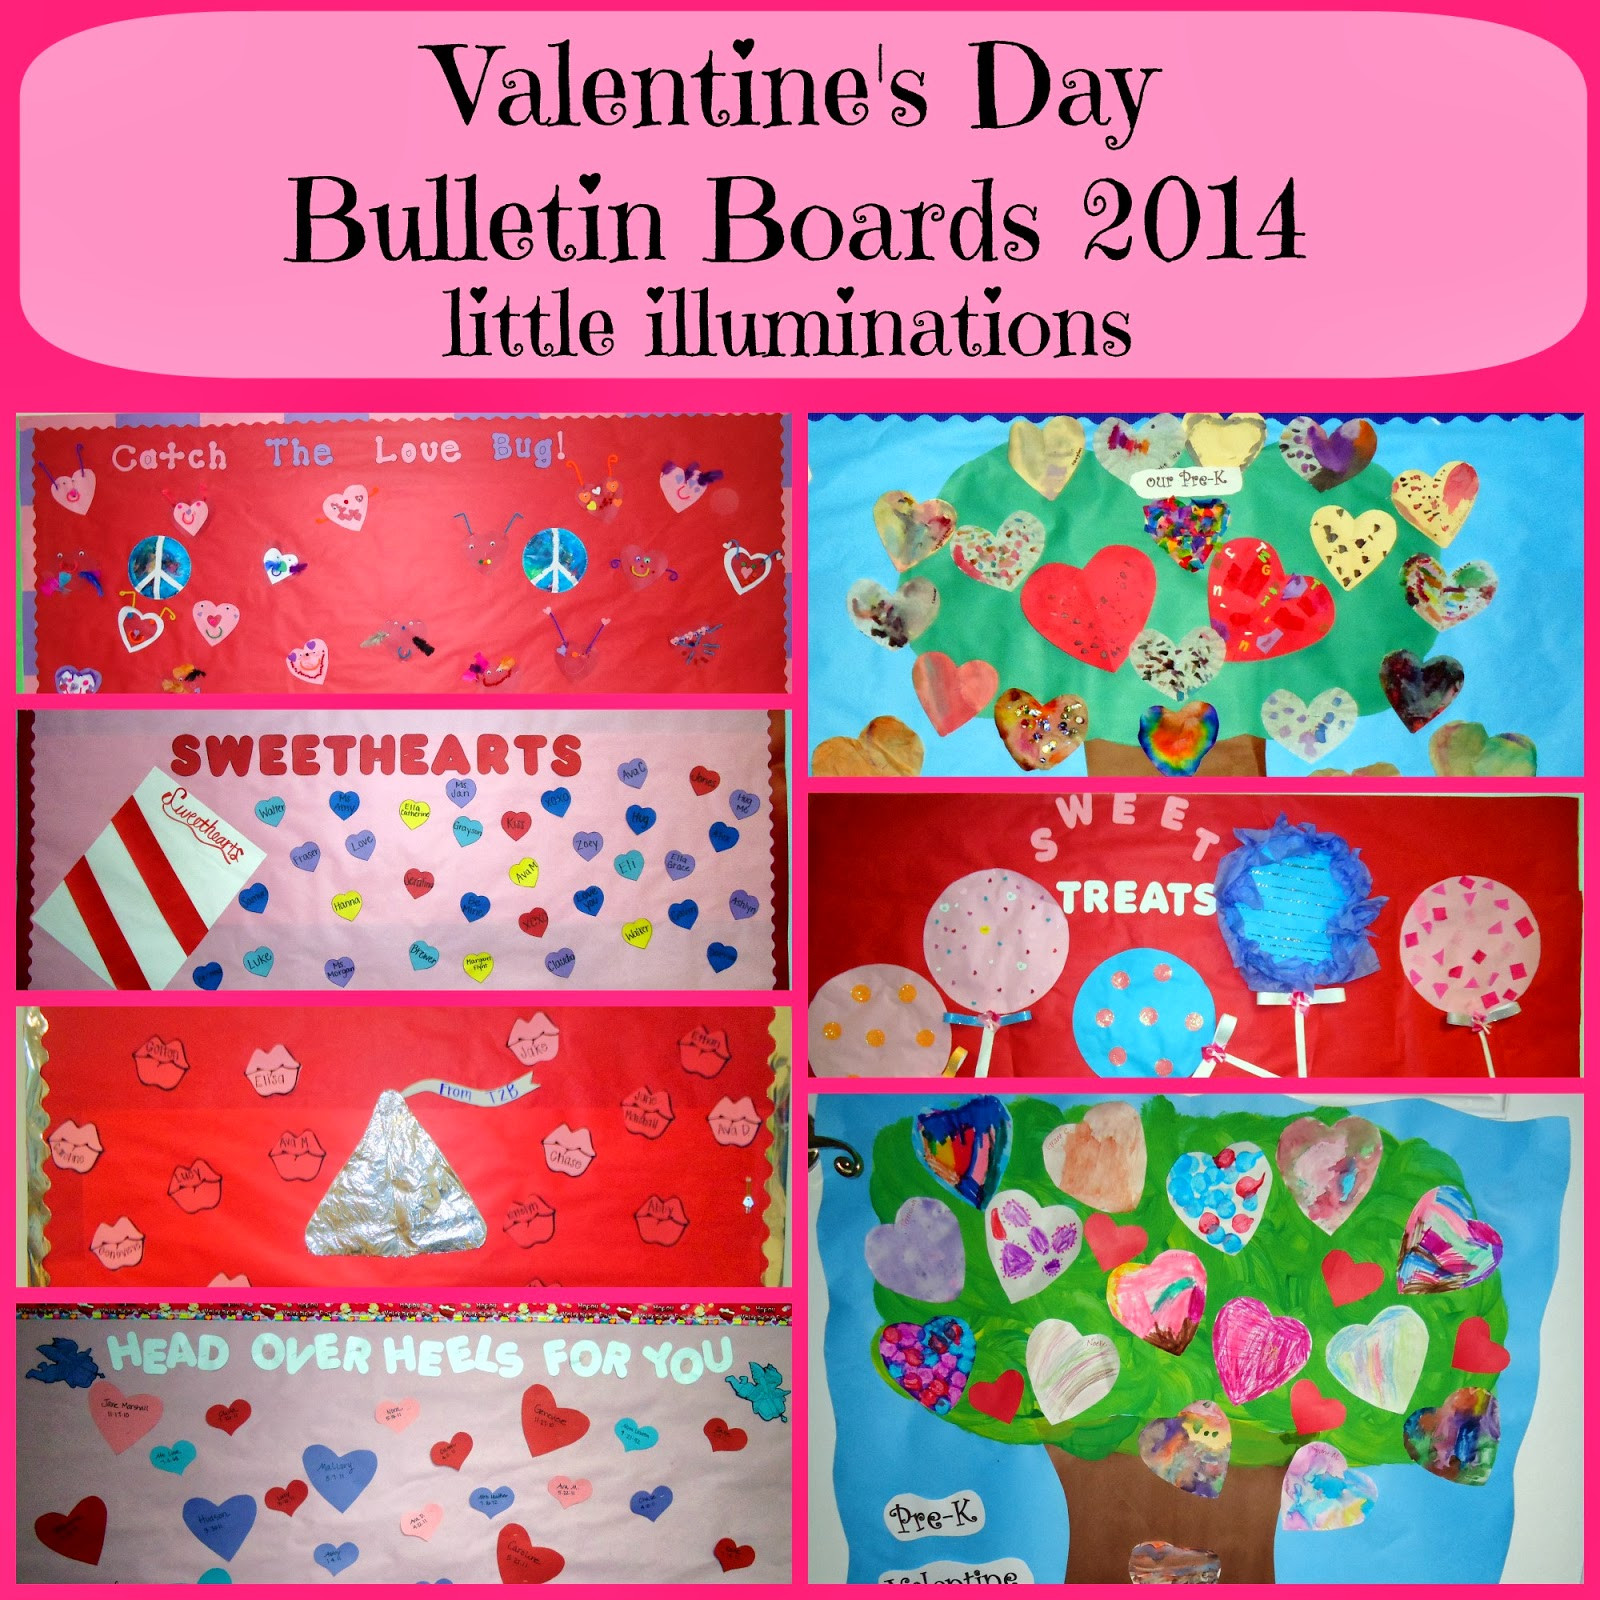 Valentines Day Bulletin Board Ideas For Preschool
 little illuminations Valentine s Day Bulletin Boards 2014